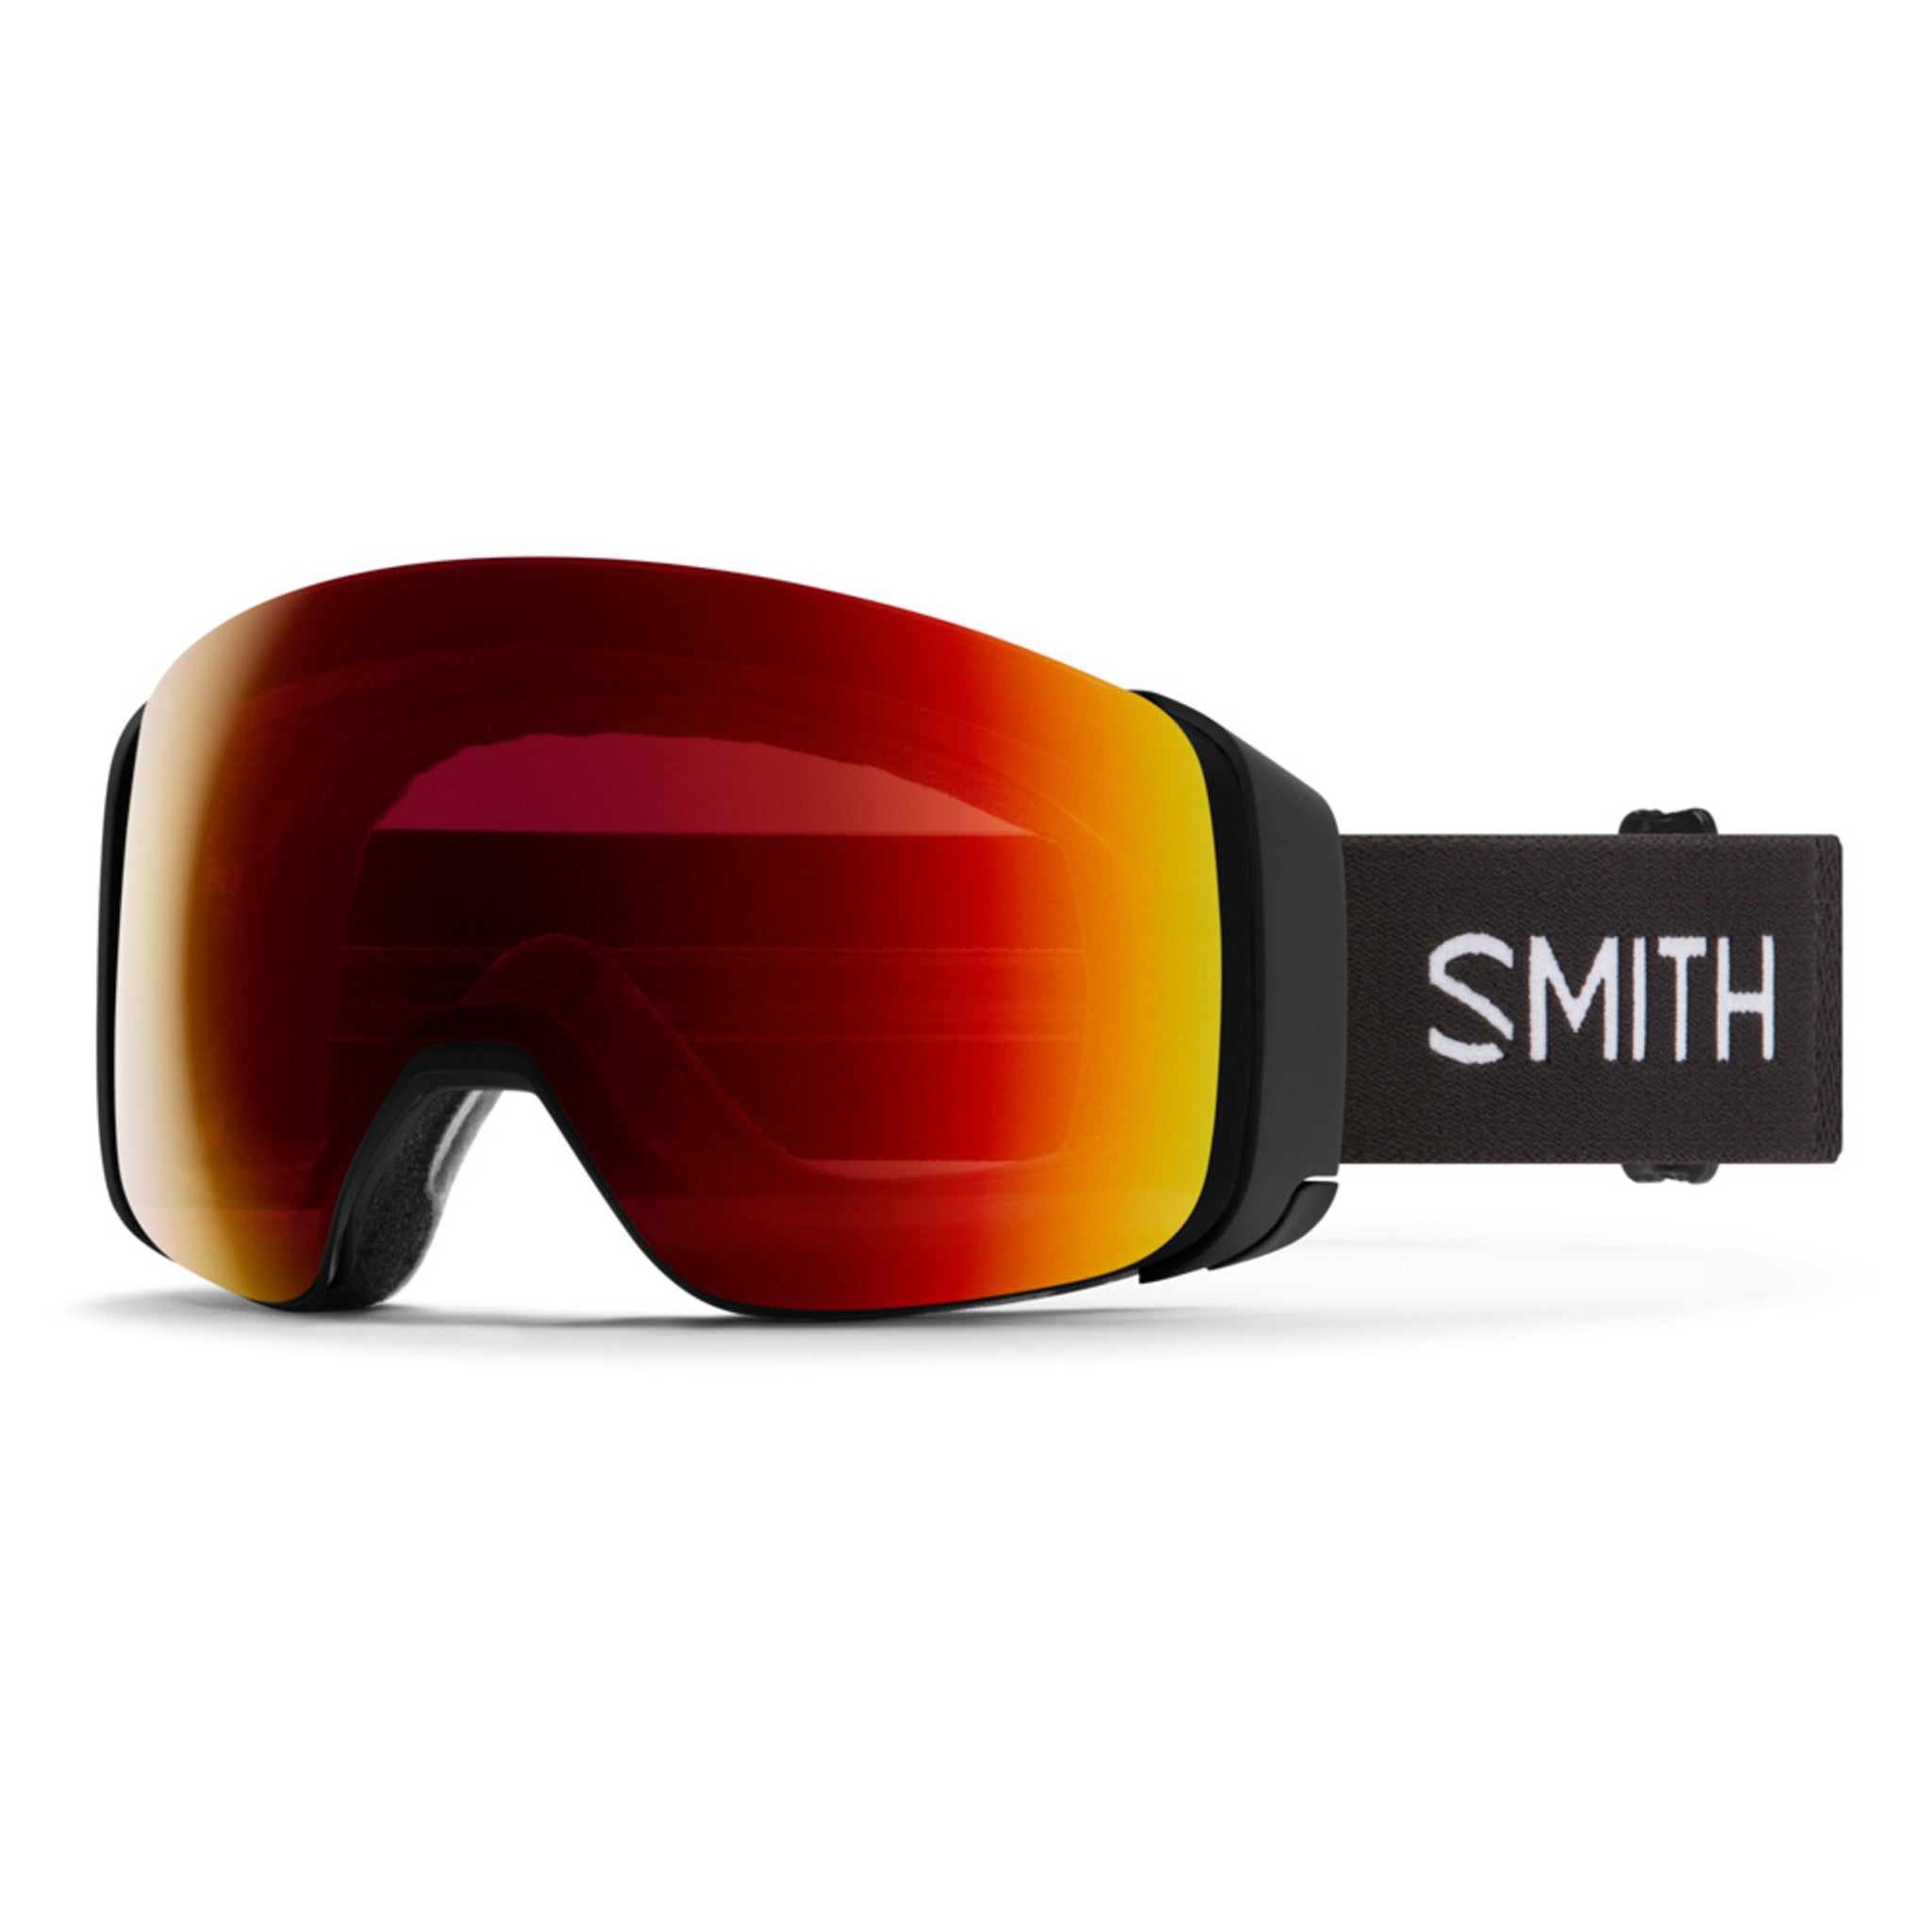 Smith 4D MAG Low Bridge Fit Goggle | Alpine / Alpine Accessories 